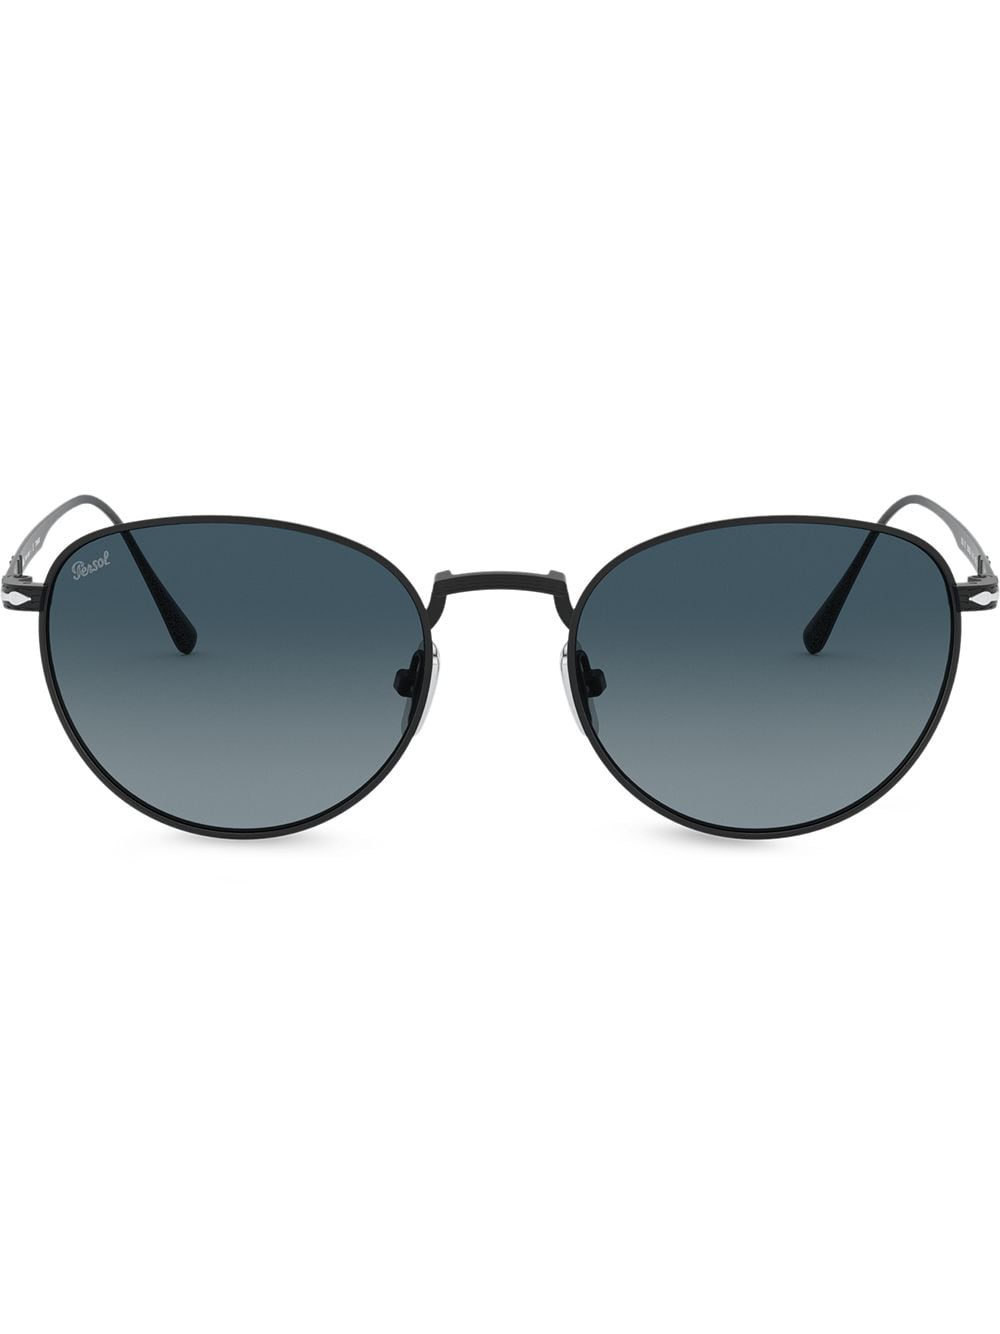 Persol Round Frame Sunglasses In Black